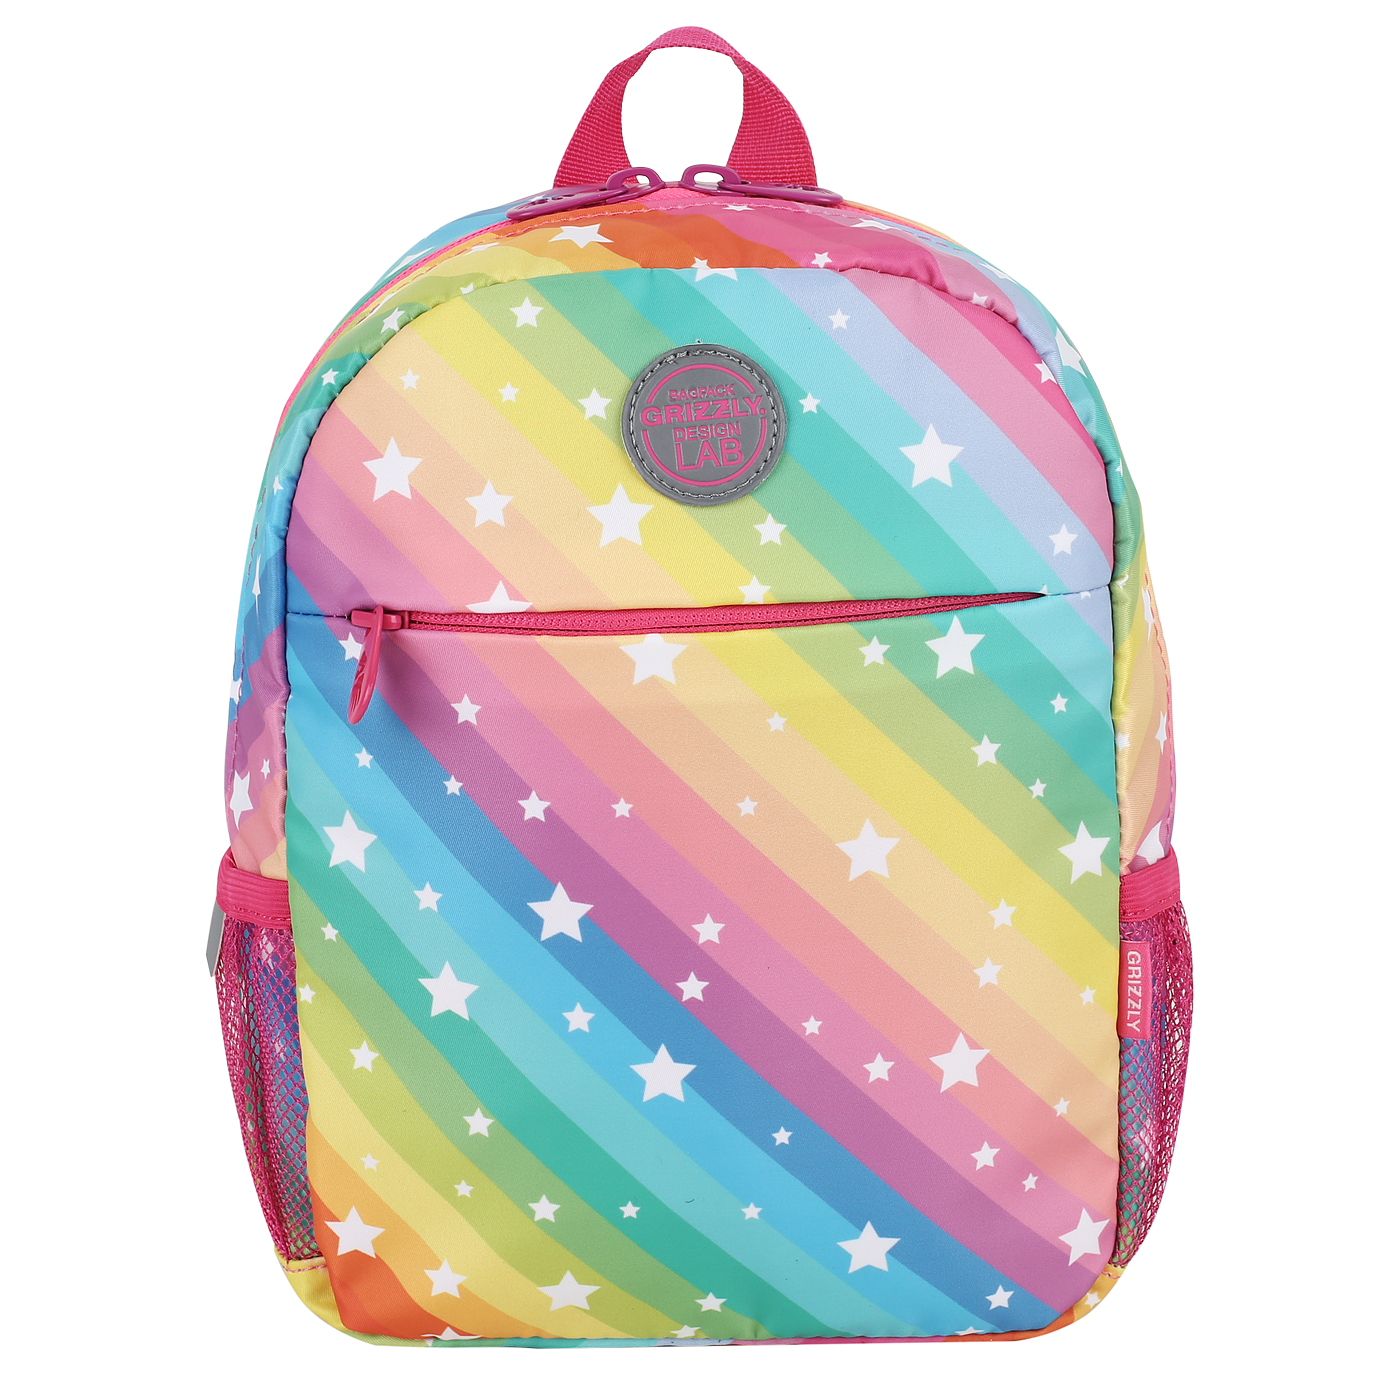 Grizzly Детский рюкзак цвета радуги